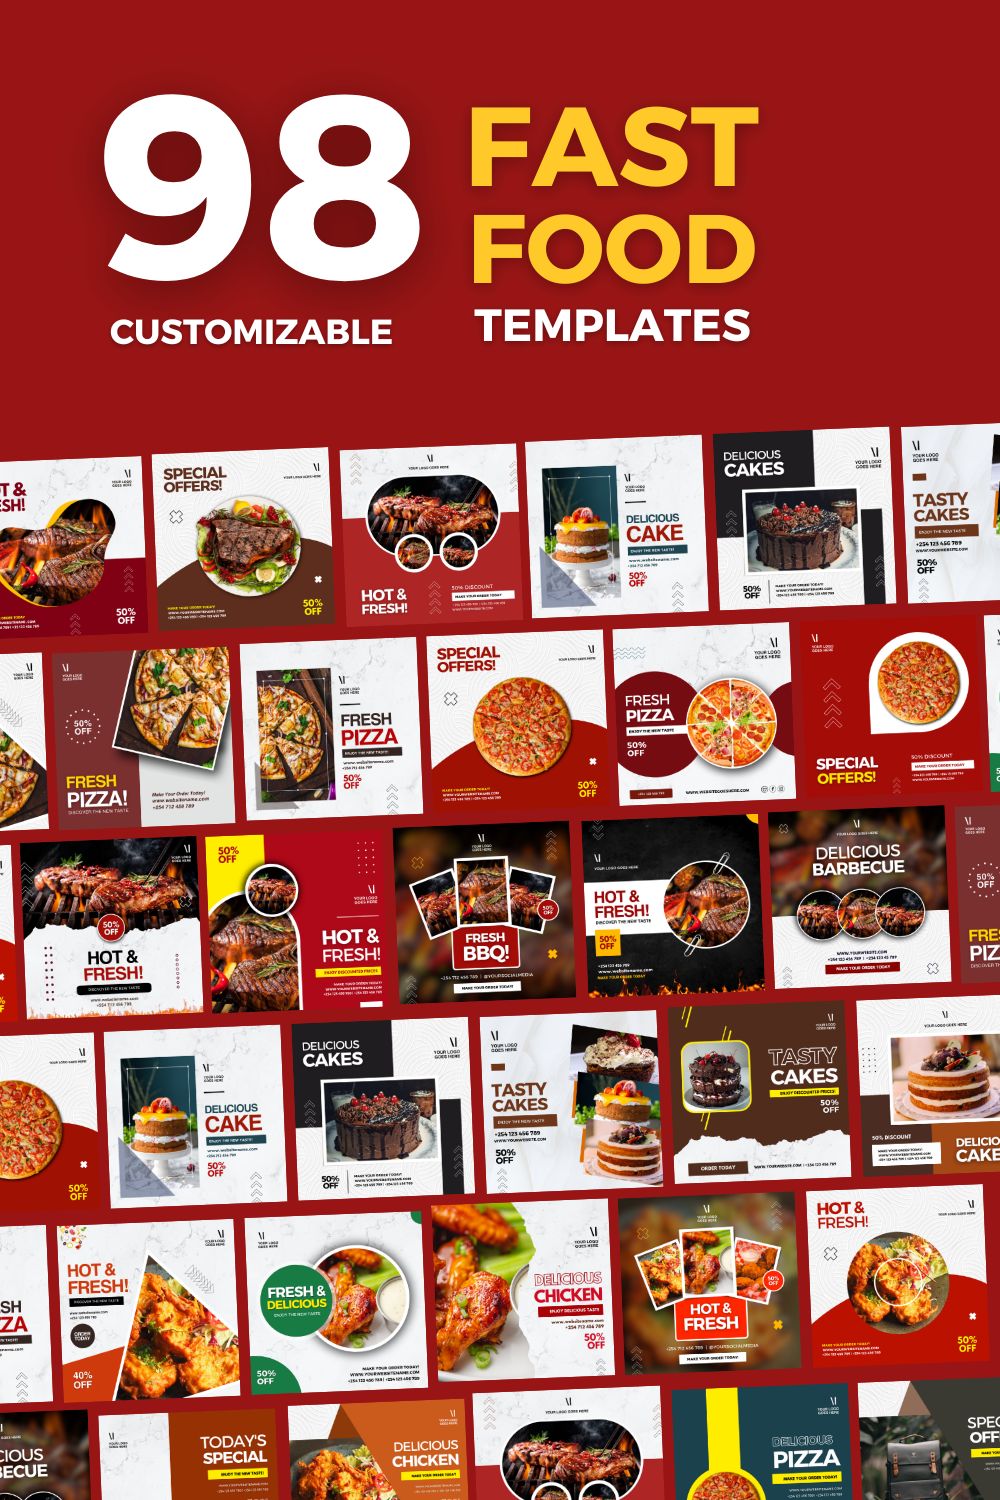 98 Fast Food Templates Design Bundle pinterest preview image.